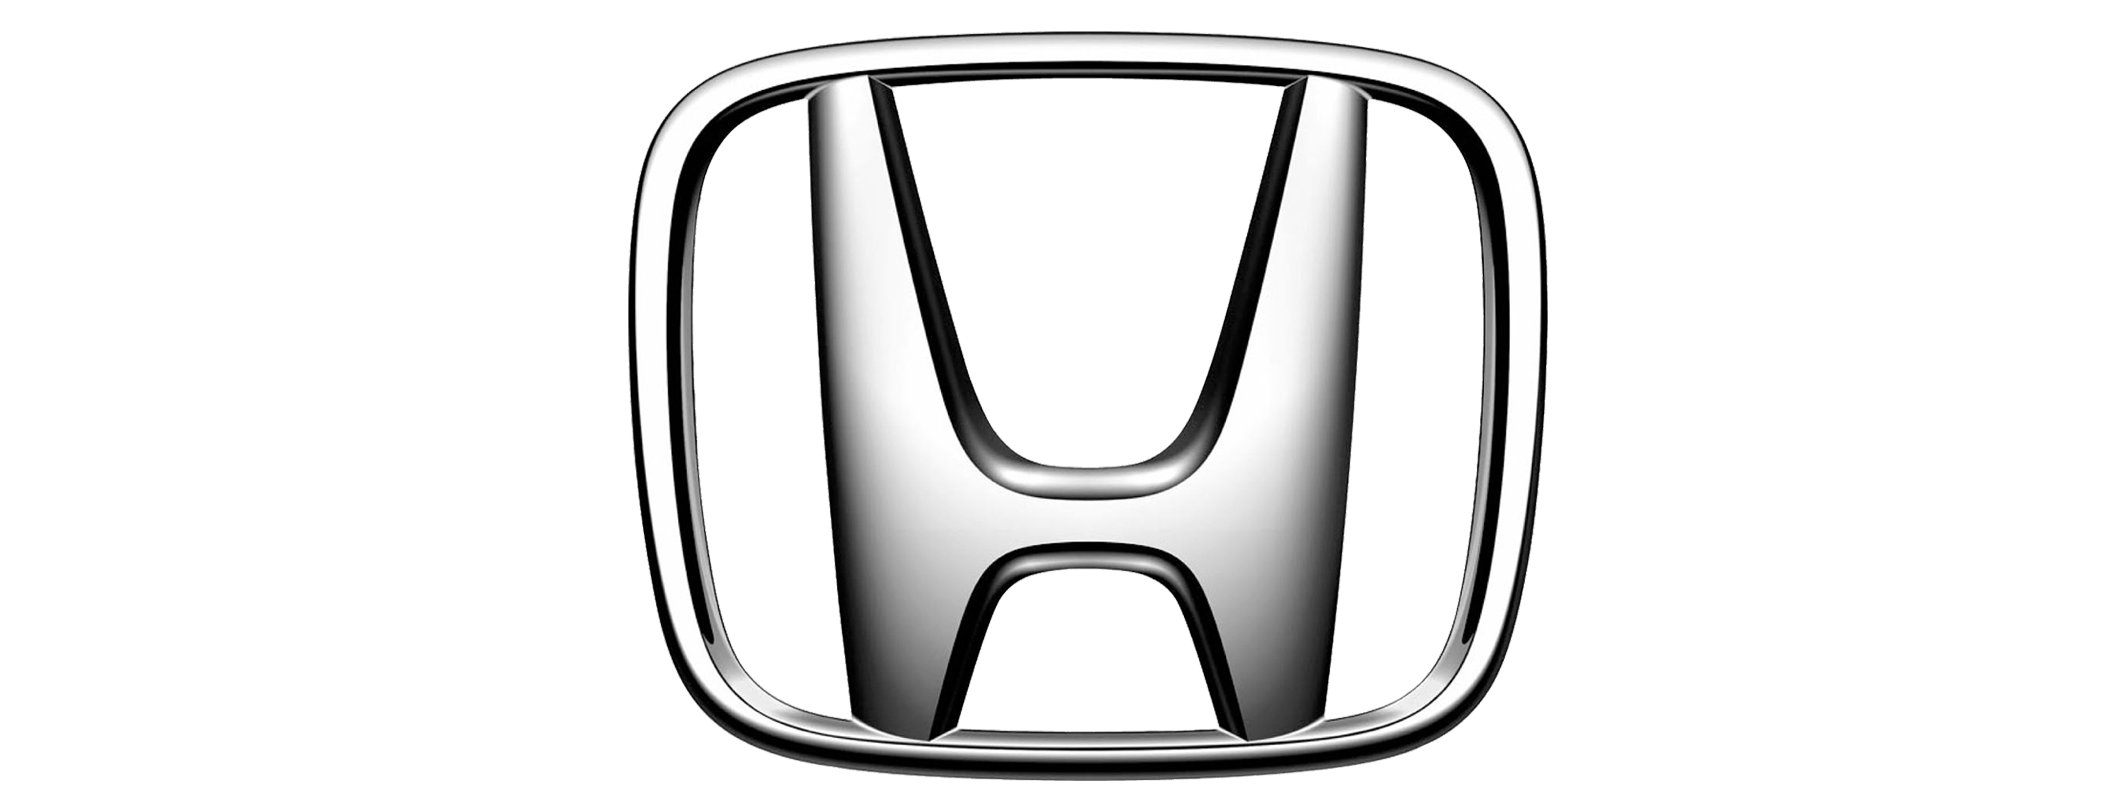 Honda Logo - Honda Logo Meaning and History. Symbol Honda | World Cars Brands